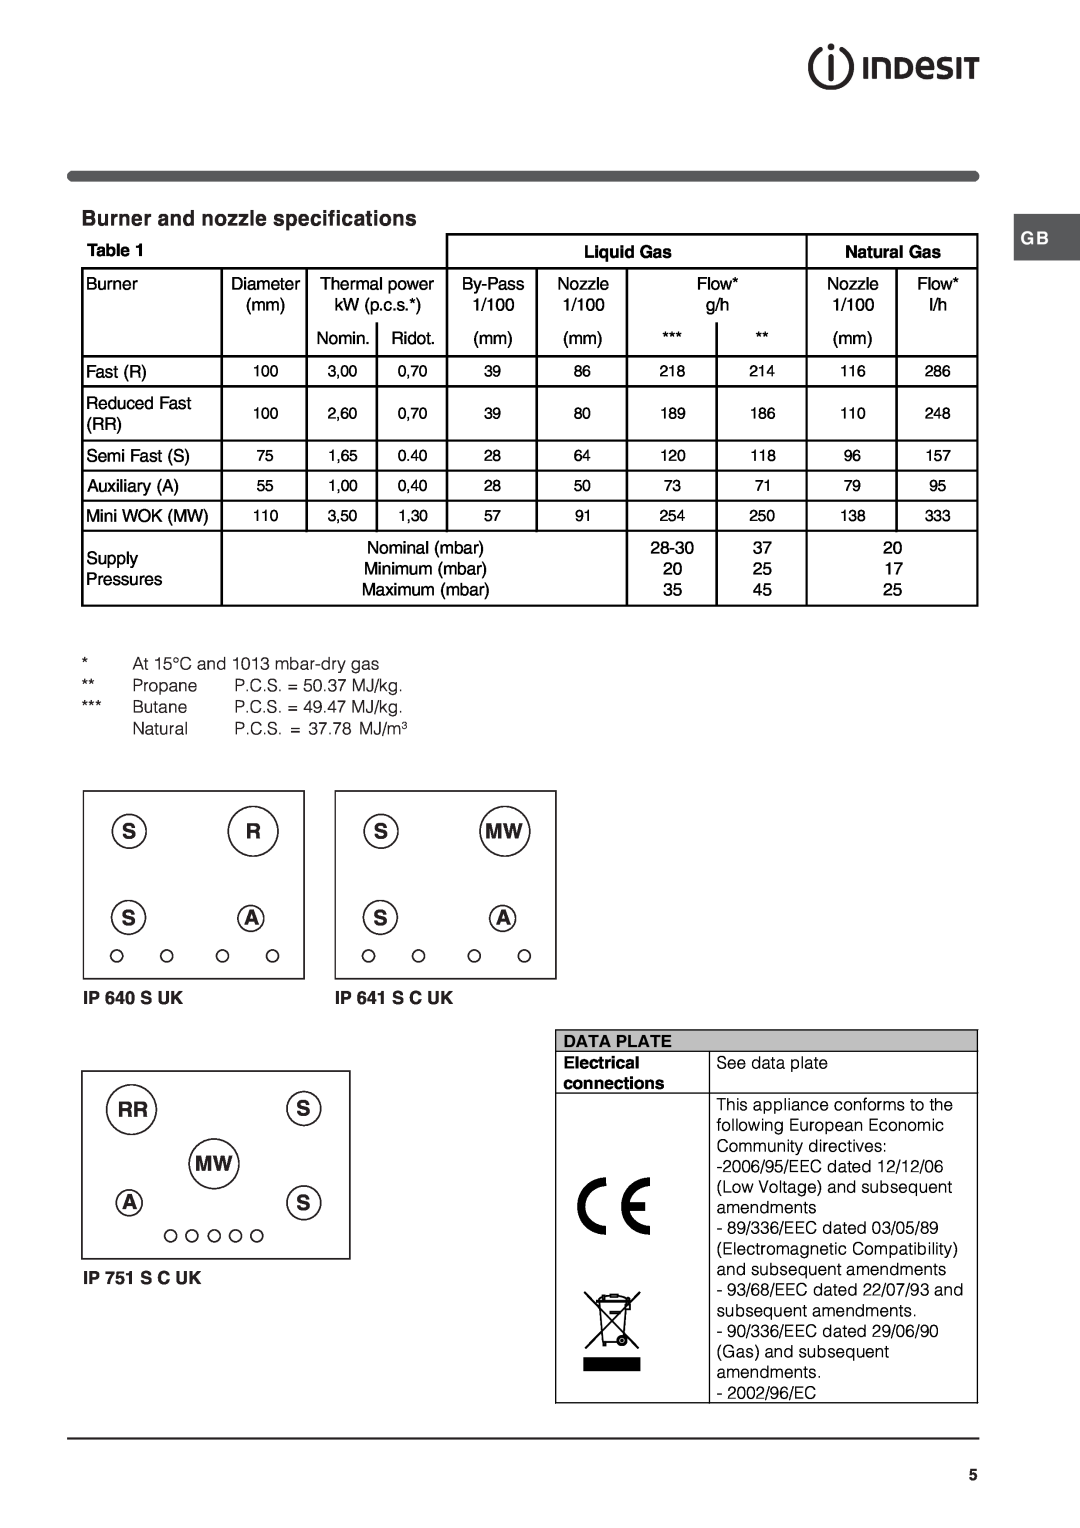 Indesit IP 640 S UK Burner and nozzle specifications, IP 641 S C UK, IP 751 S C UK, S R S Mw S A S A, Rrs Mw As 